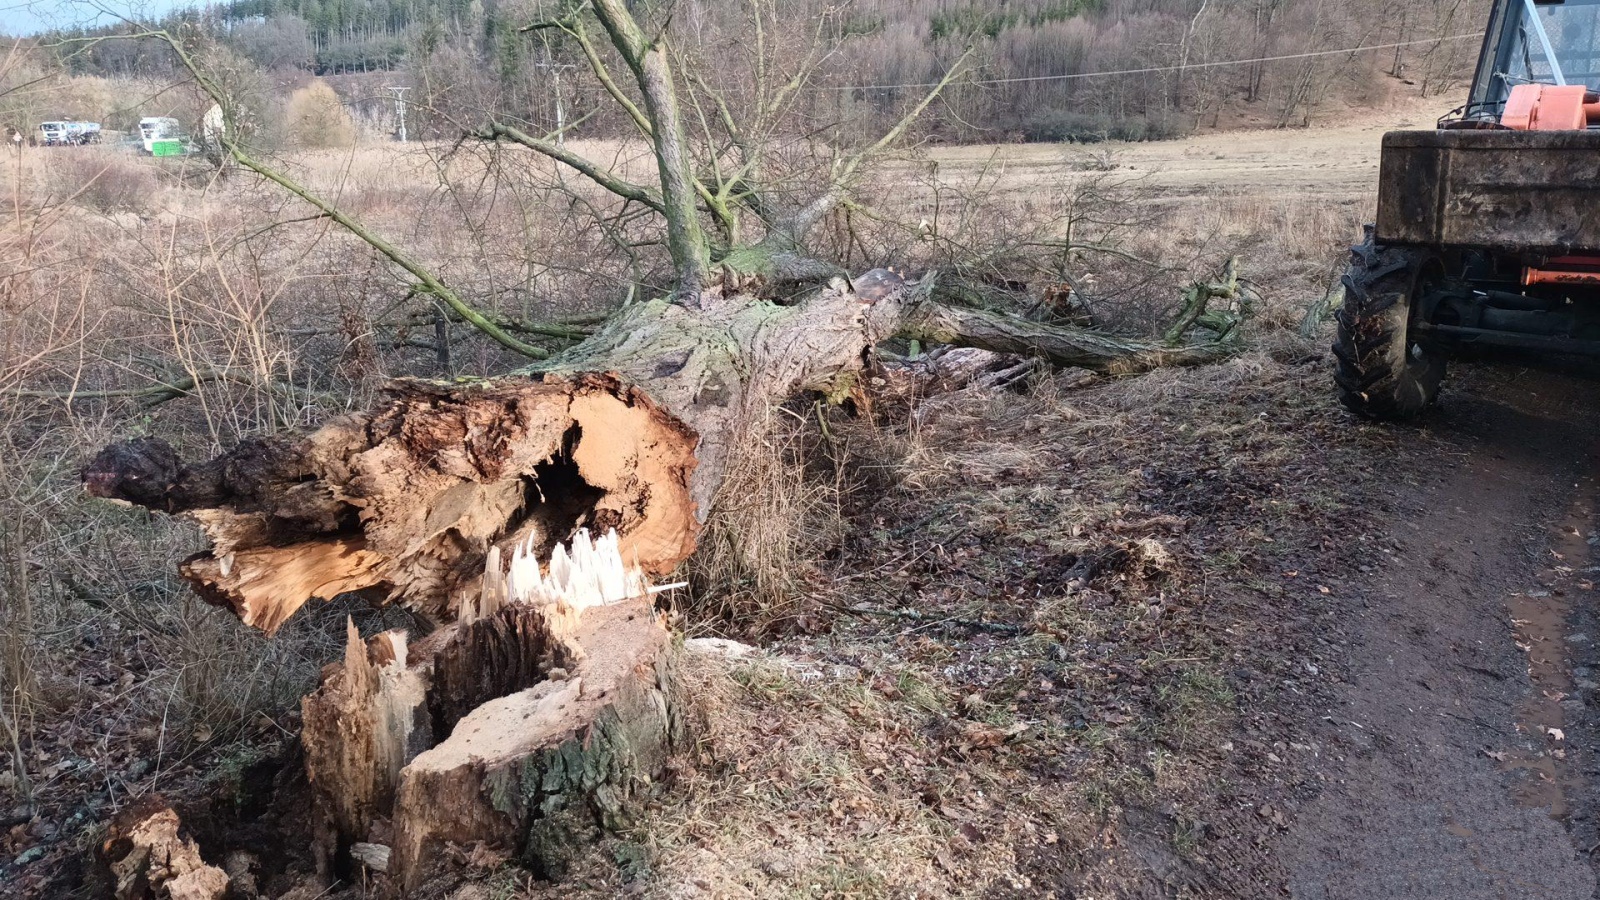 002-Spadlý strom v obci Hluboš na Příbramsku.jpg